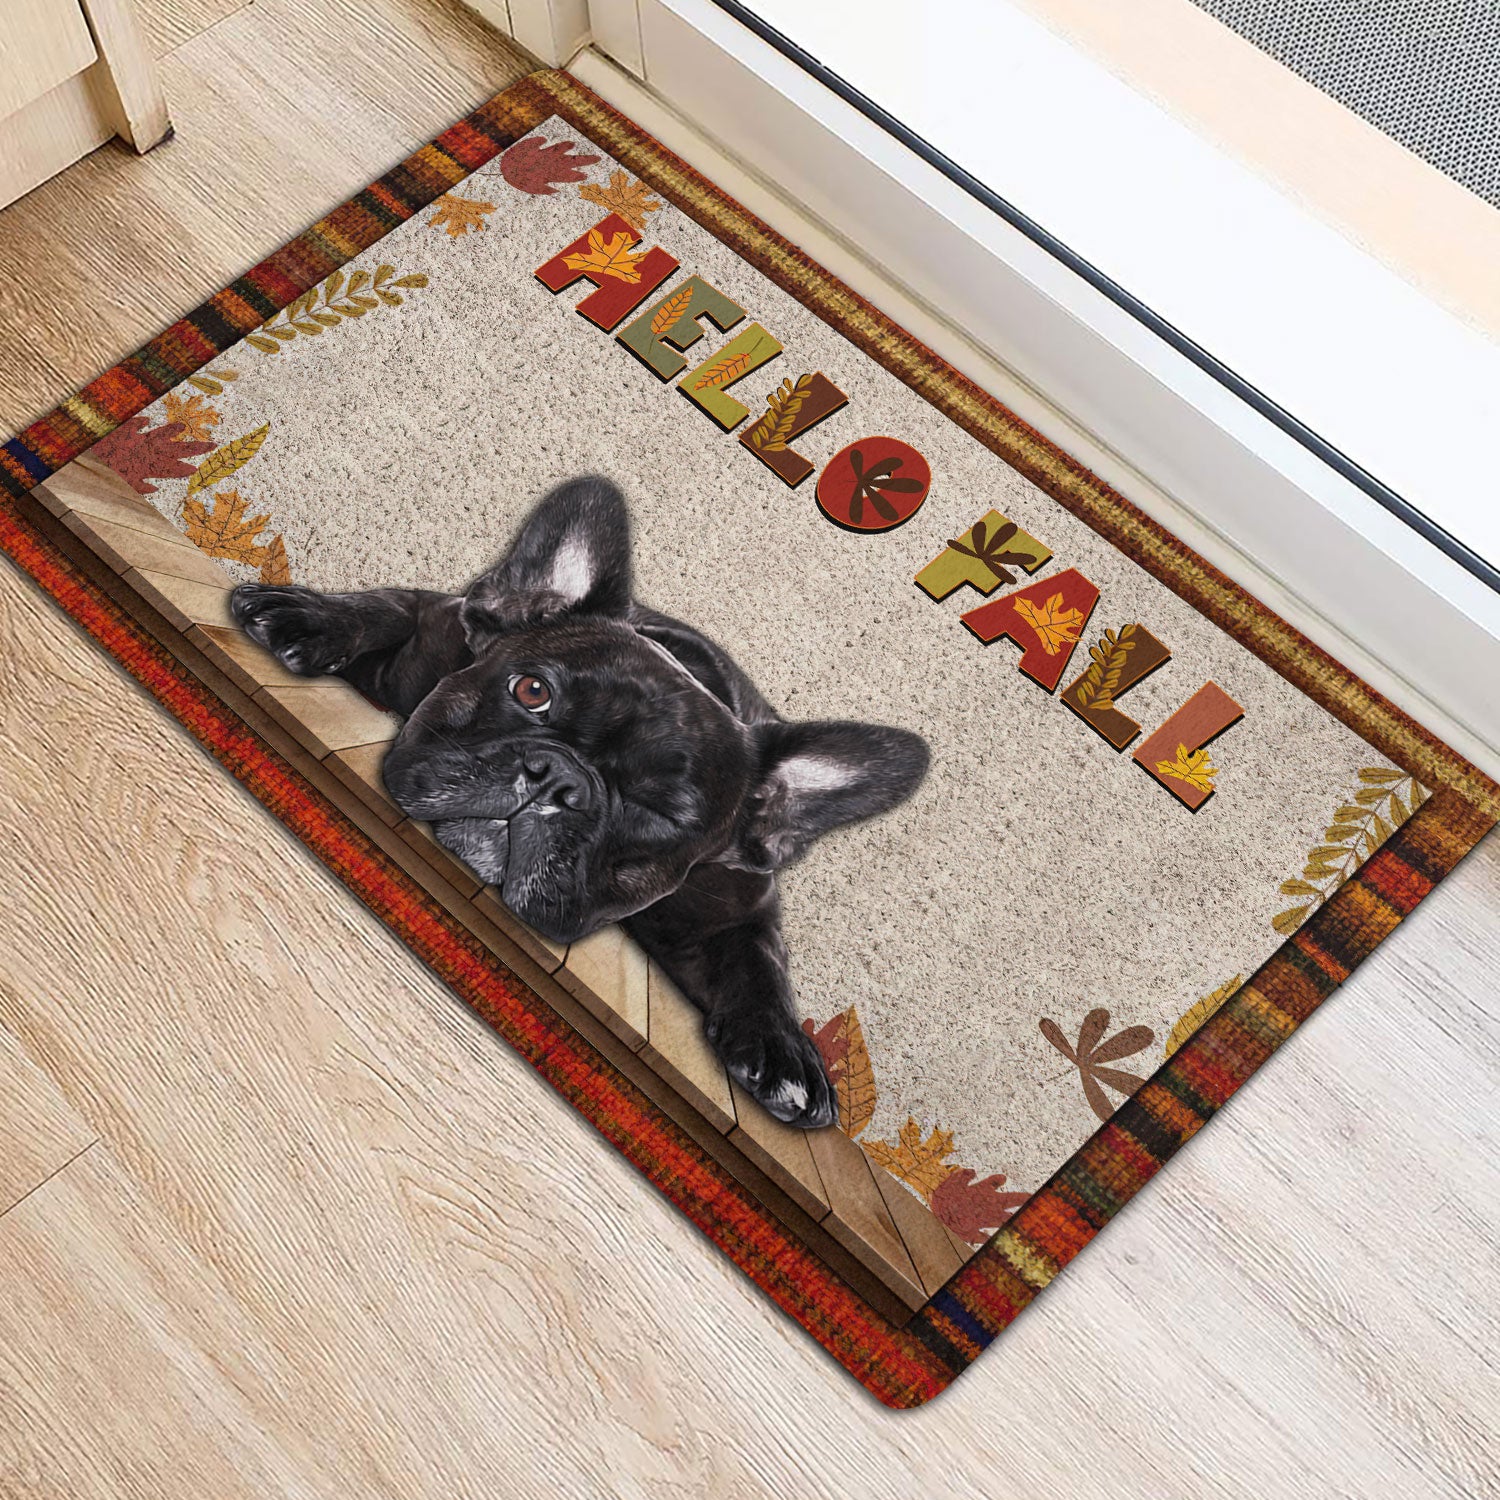 Ohaprints-Doormat-Outdoor-Indoor-French-Bulldog-Dog-Hello-Fall-Pumpkin-Spice-Maple-Leaf-Autumn-Rubber-Door-Mat-1734-